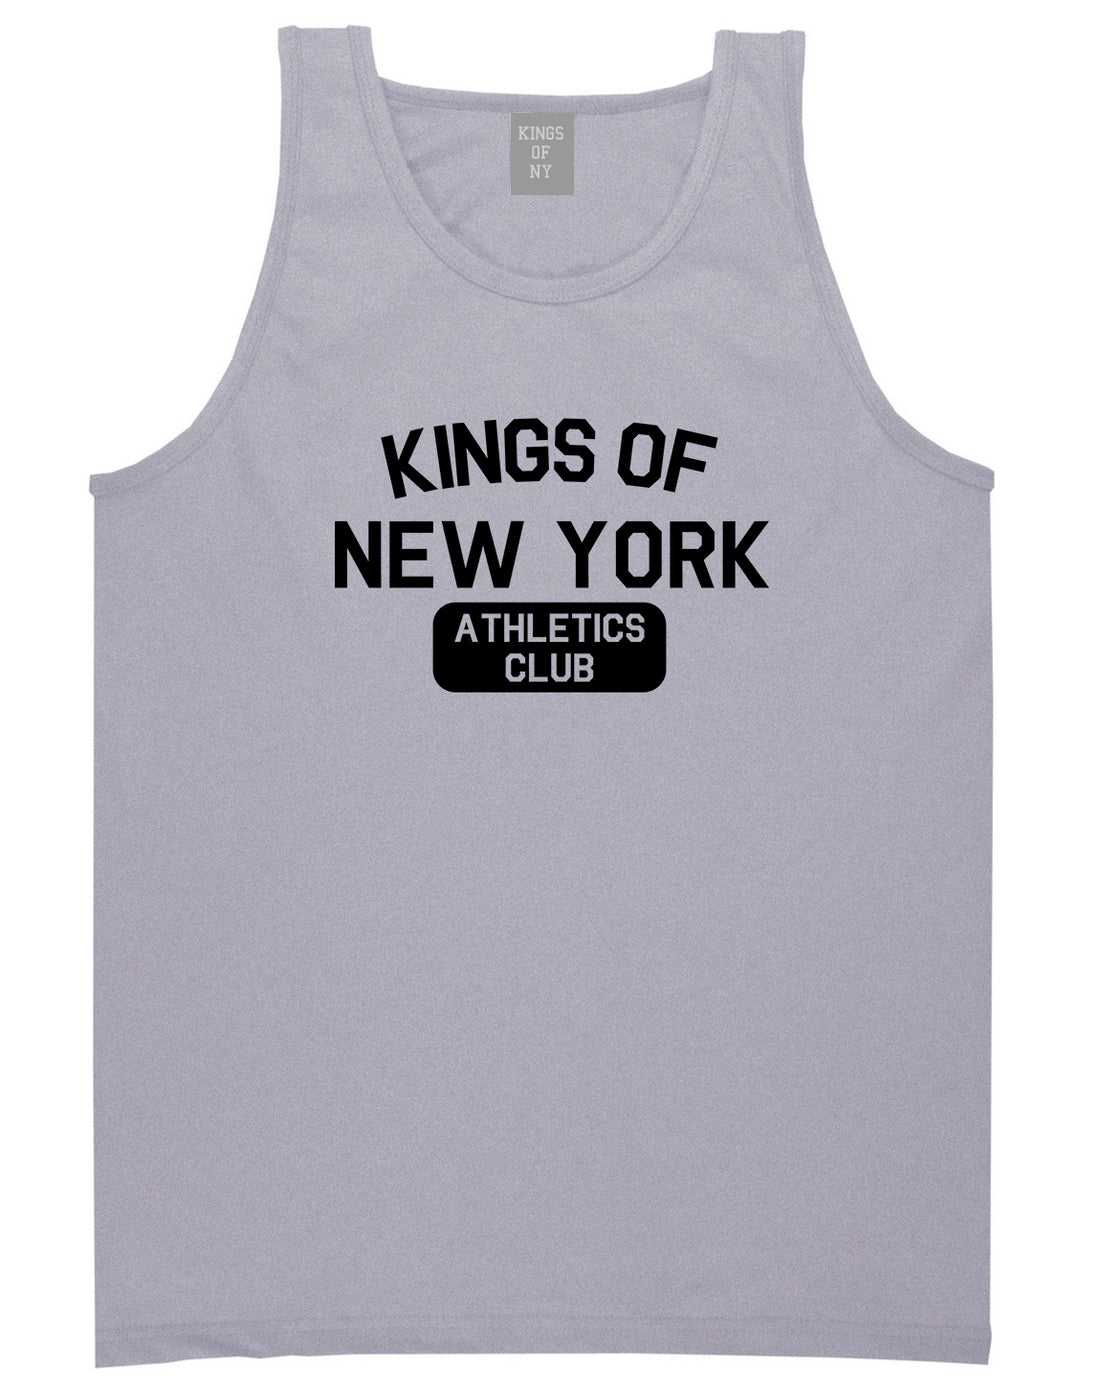 Kings Of New York Athletics Club Mens Tank Top Shirt Grey